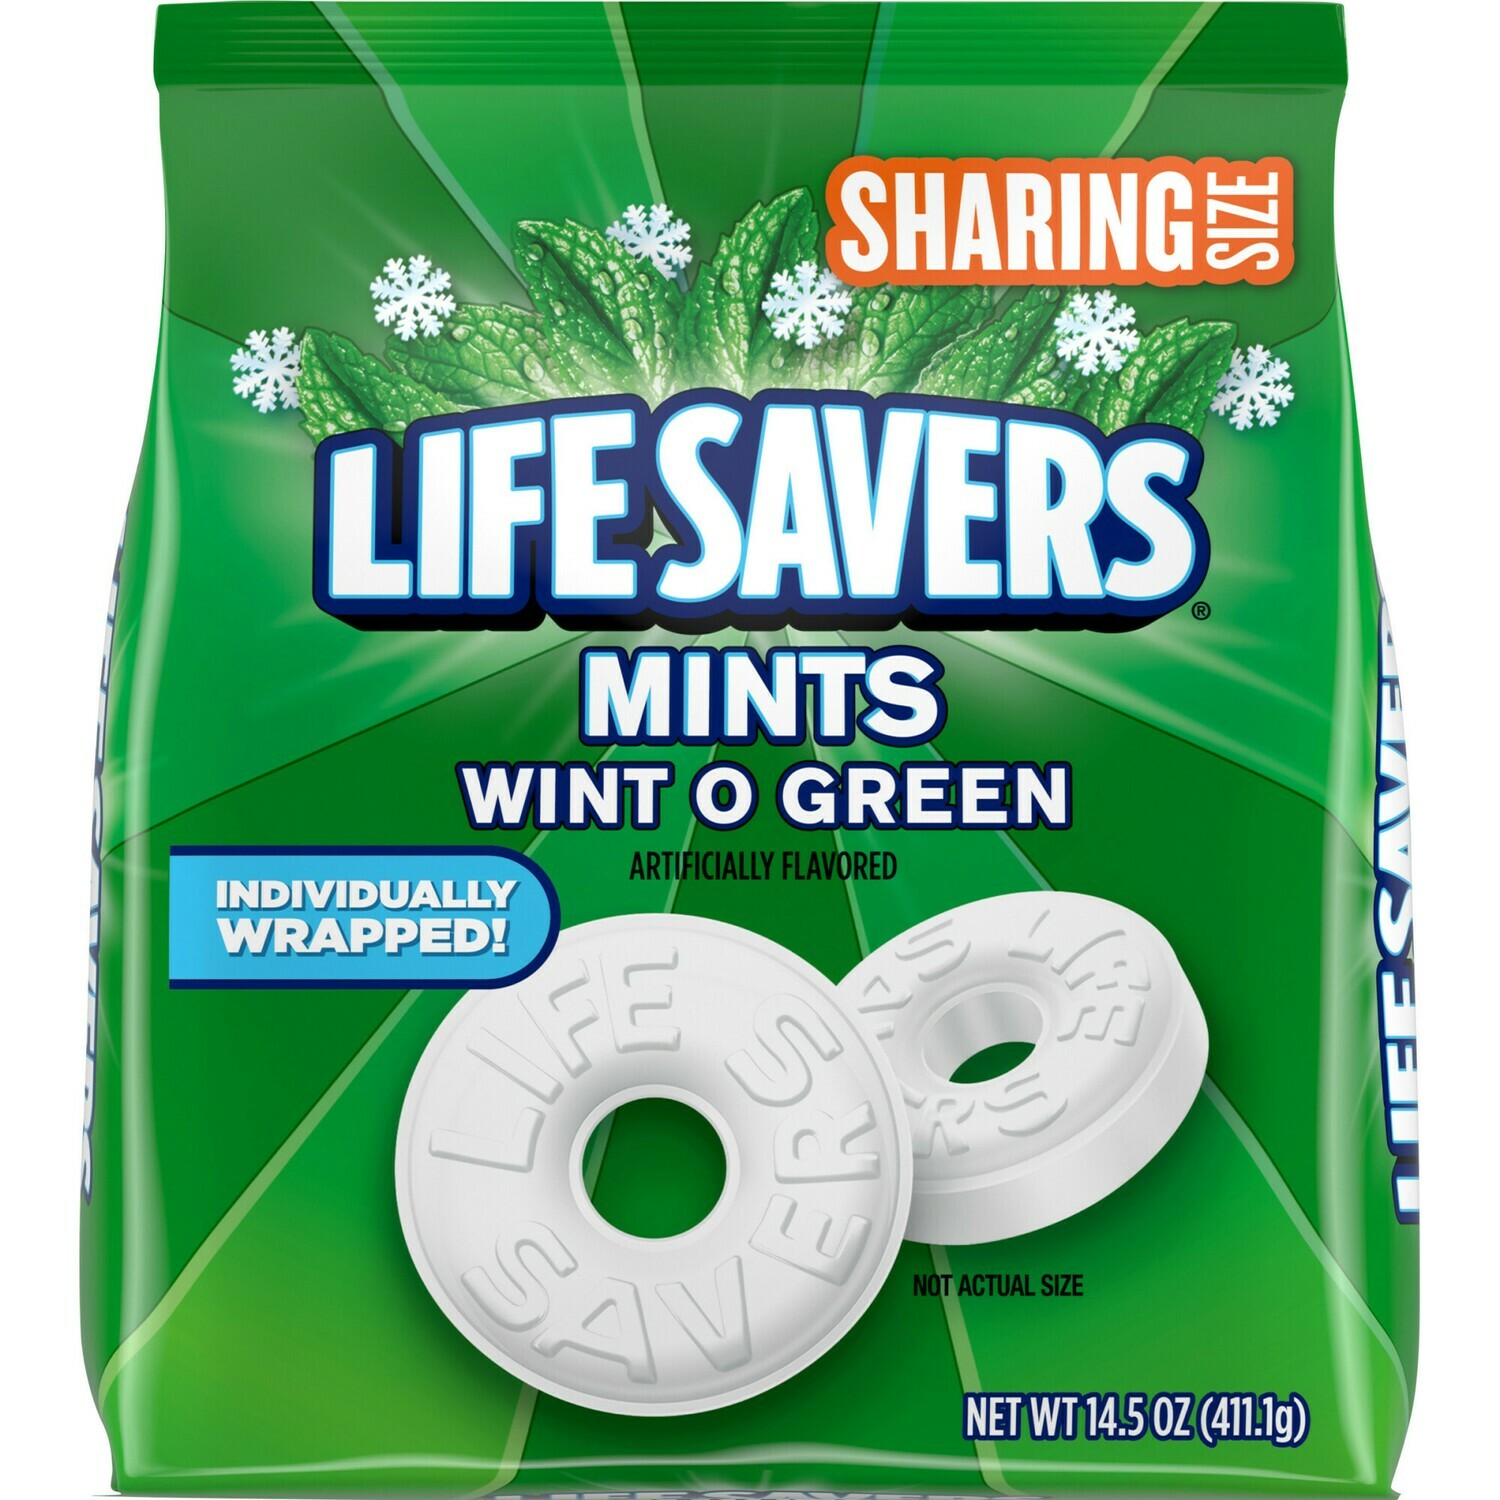 Share Pack Lifesavers Wint O Green Mints